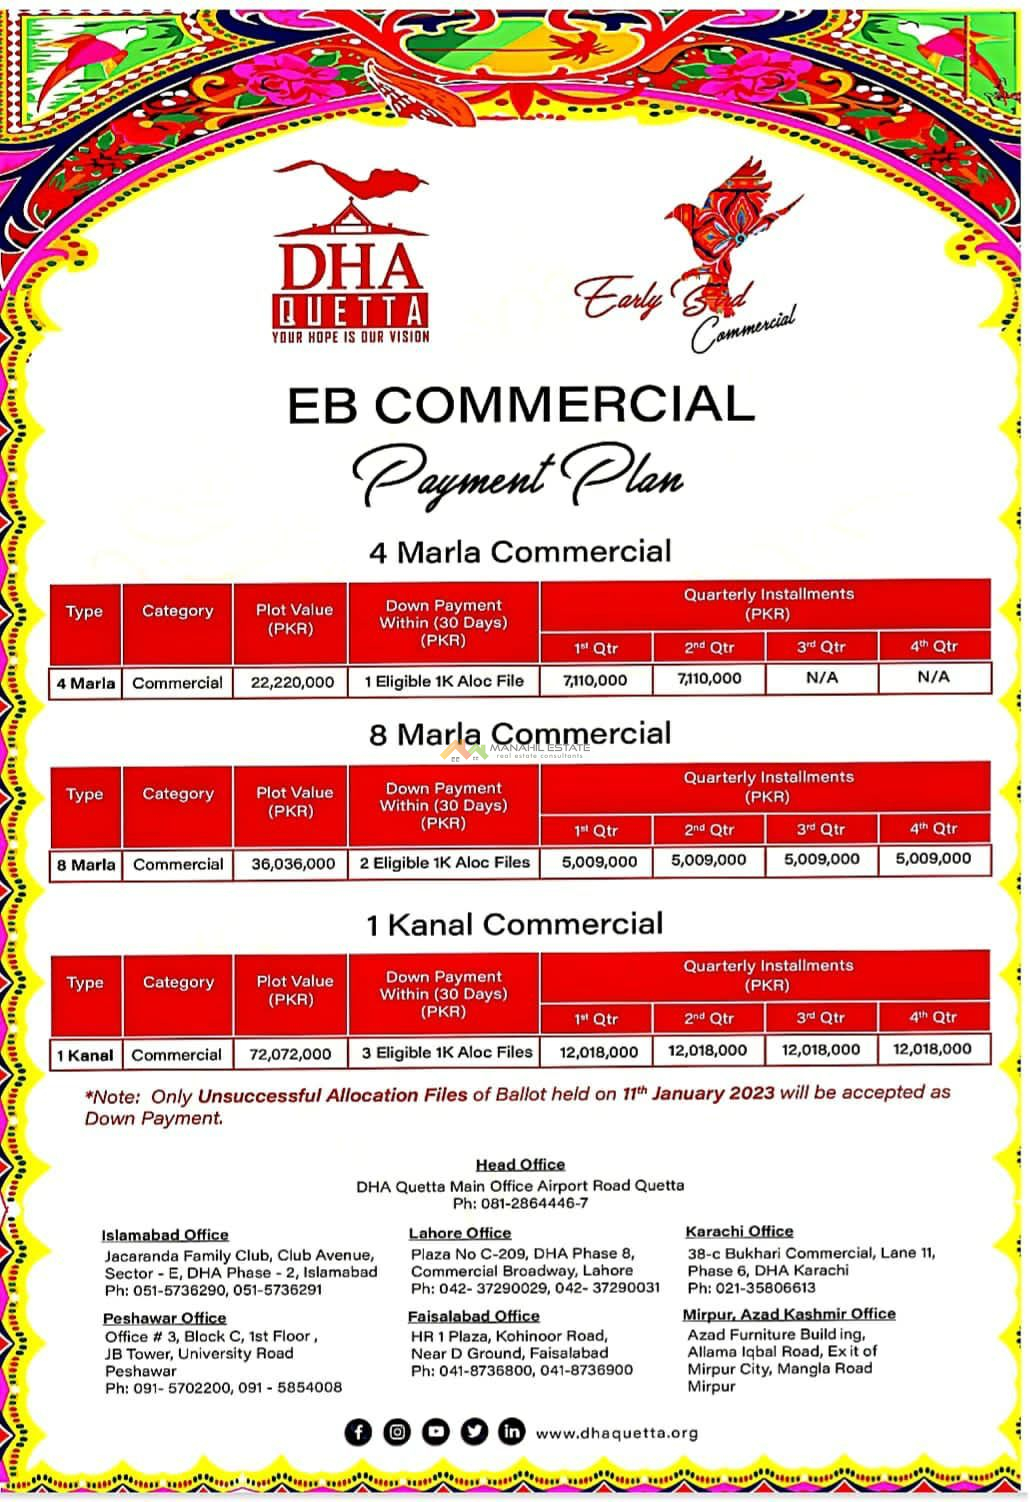 DHA Quetta Early Bird commercials